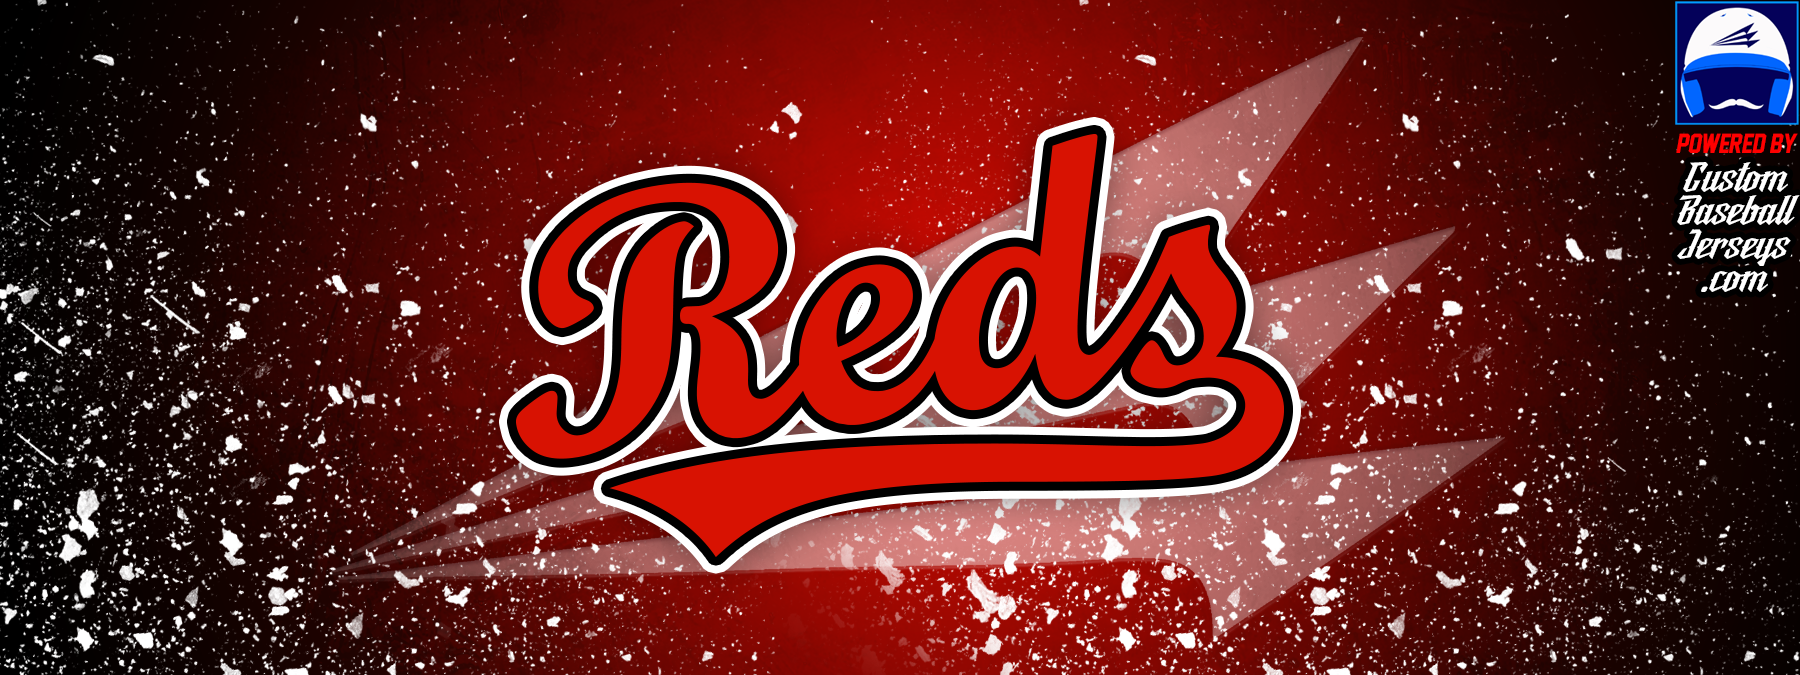 Reds Baseball Banners